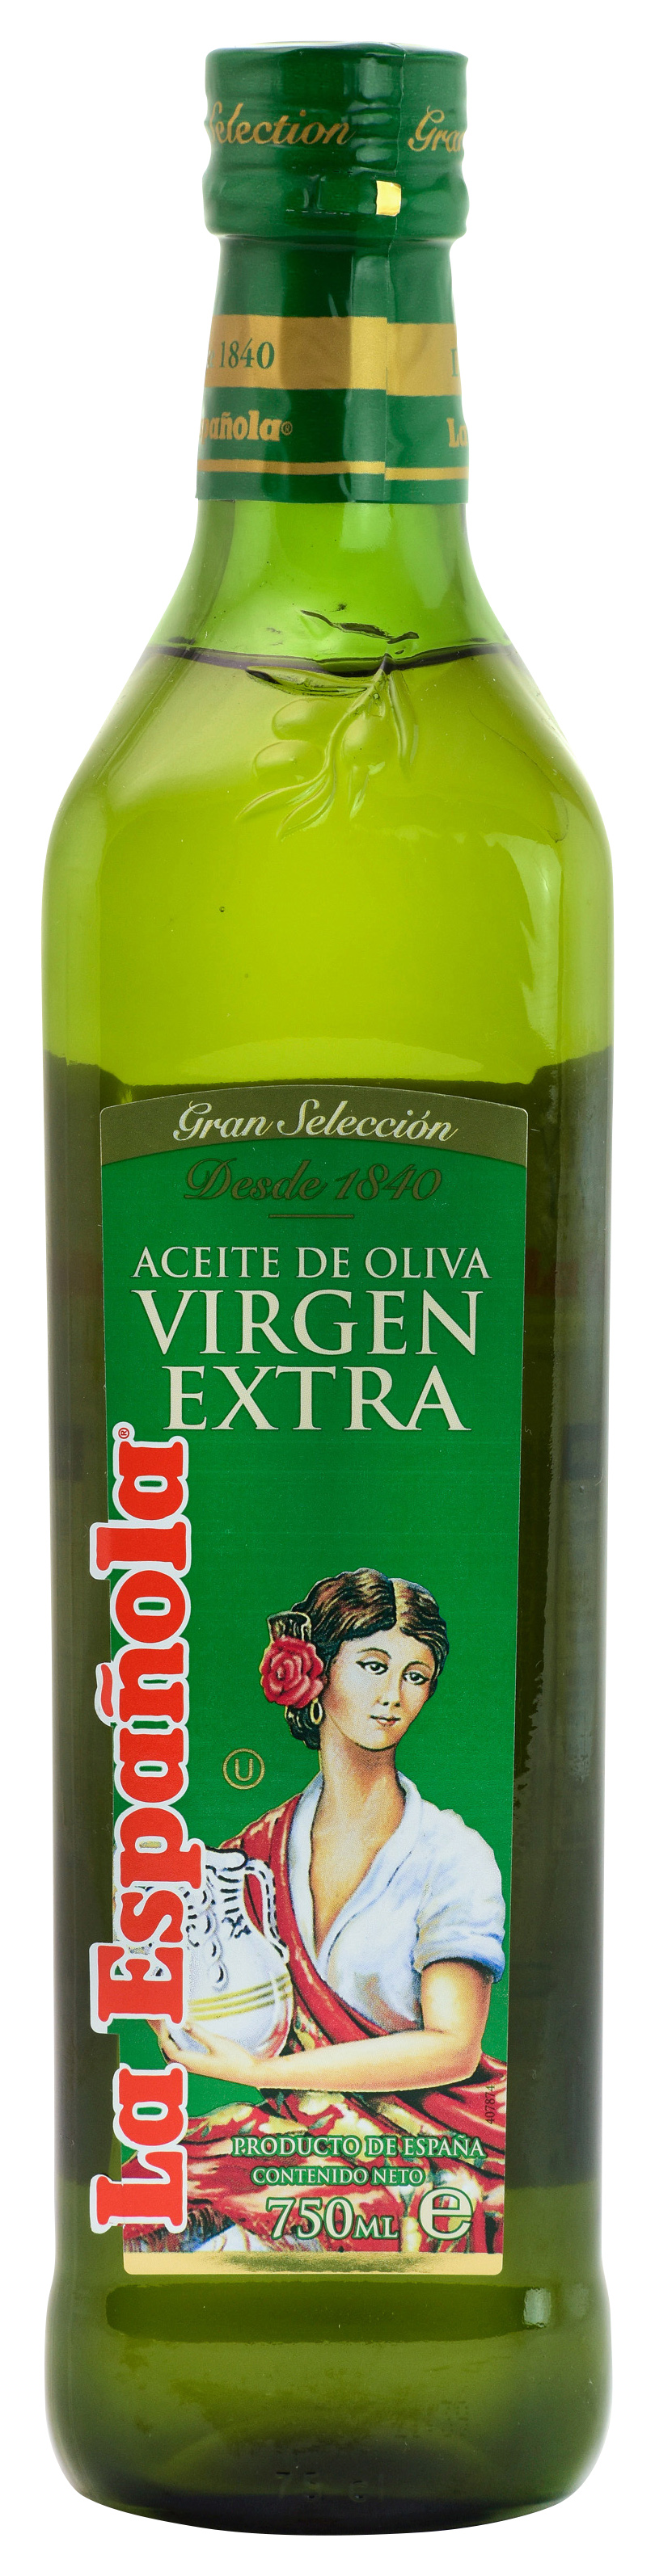 ACEITE DE OLIVA VIRGEN EXTRA VIDRIO